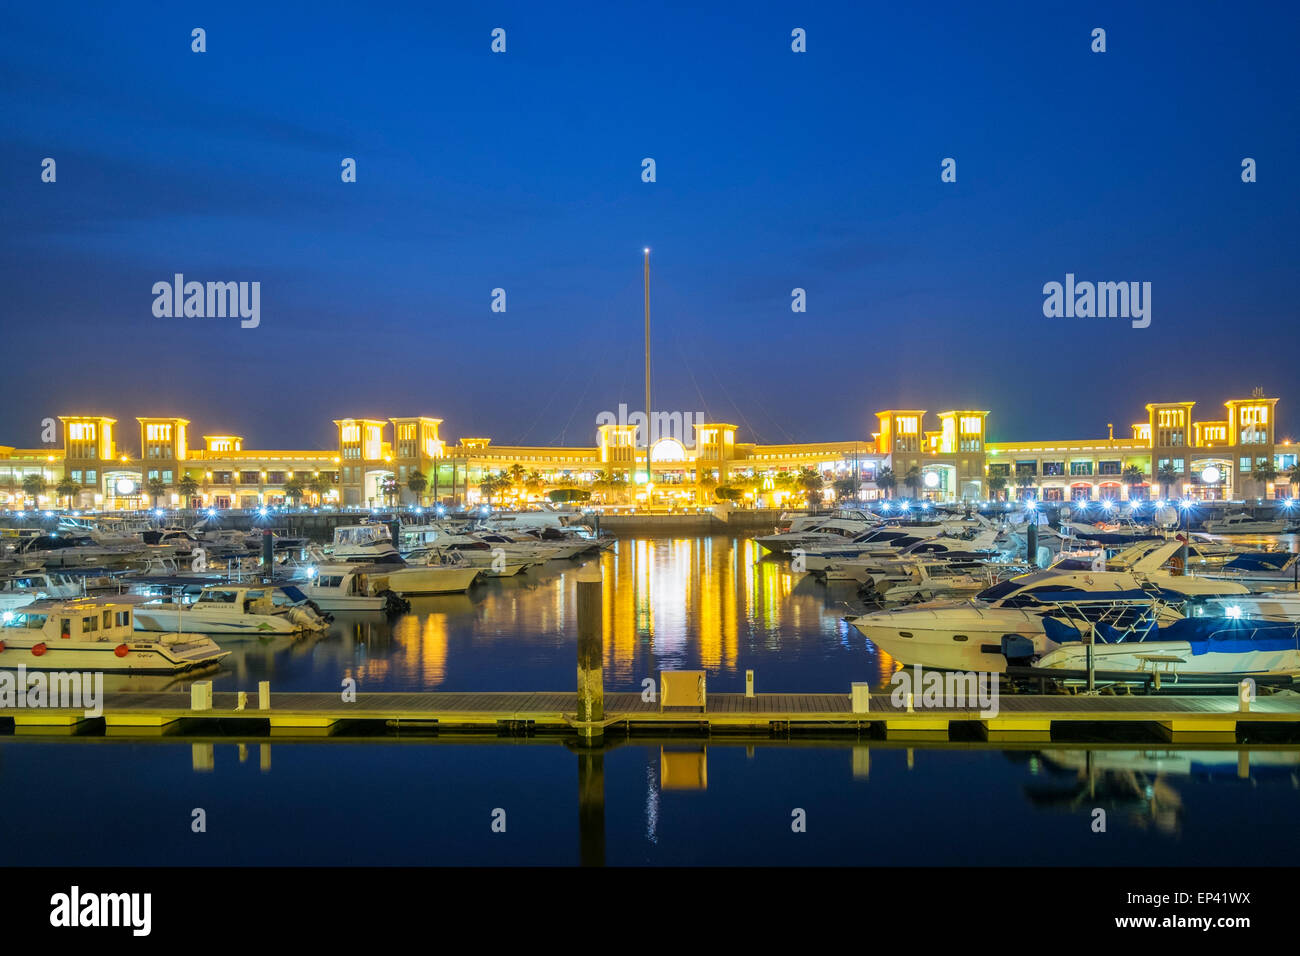 Souq Sharq shopping mall e marina di notte in Kuwait City Kuwait Foto Stock